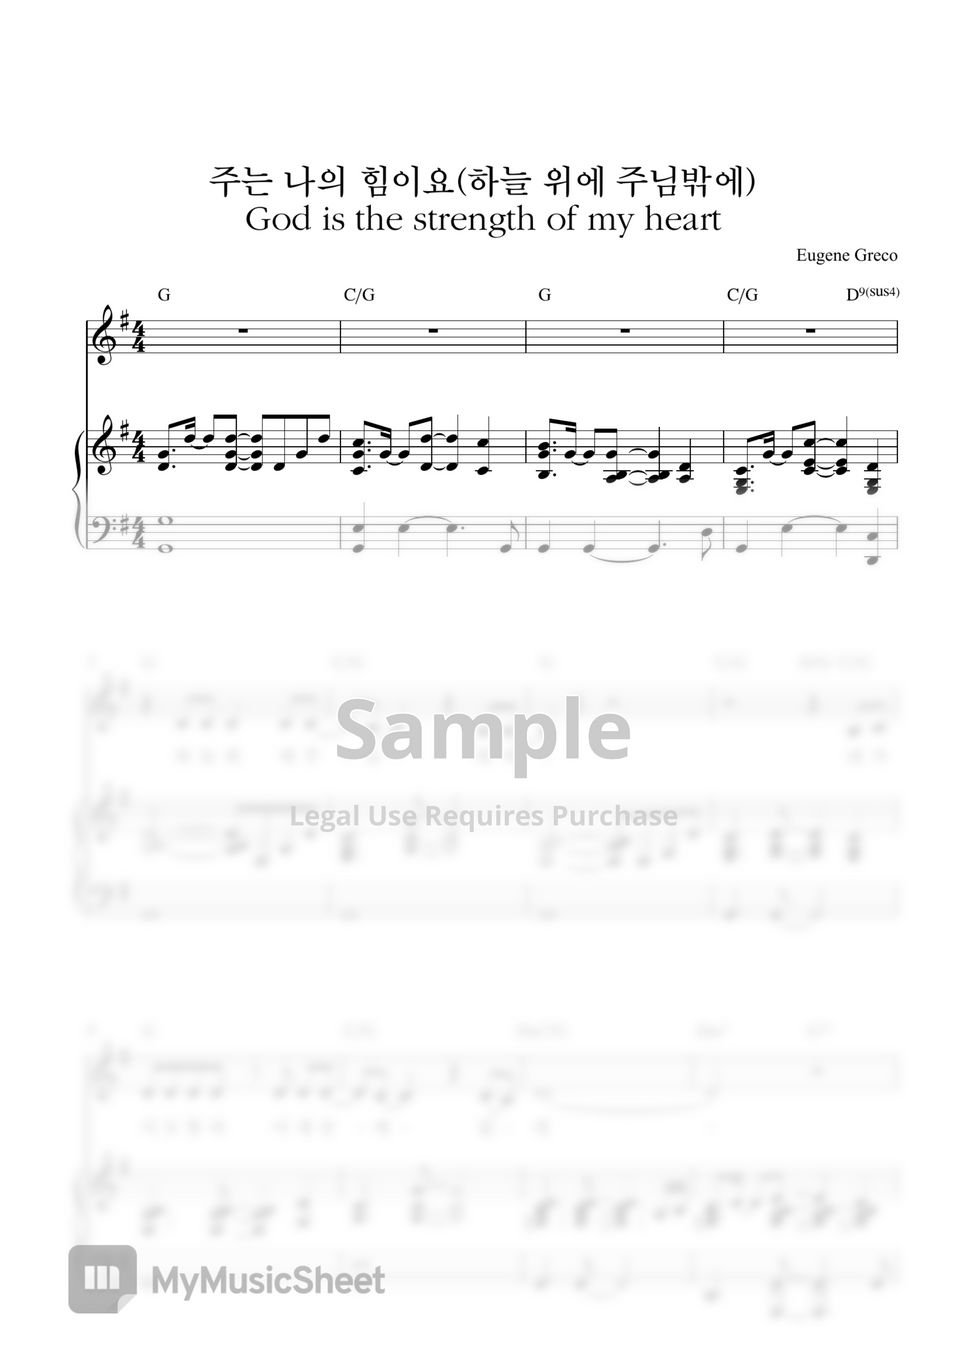 Eugene Greco - 주는 나의 힘이요(하늘 위에 주님 밖에_God is the strength of my heart_G Key) (피아노 3단) by Samuel Park